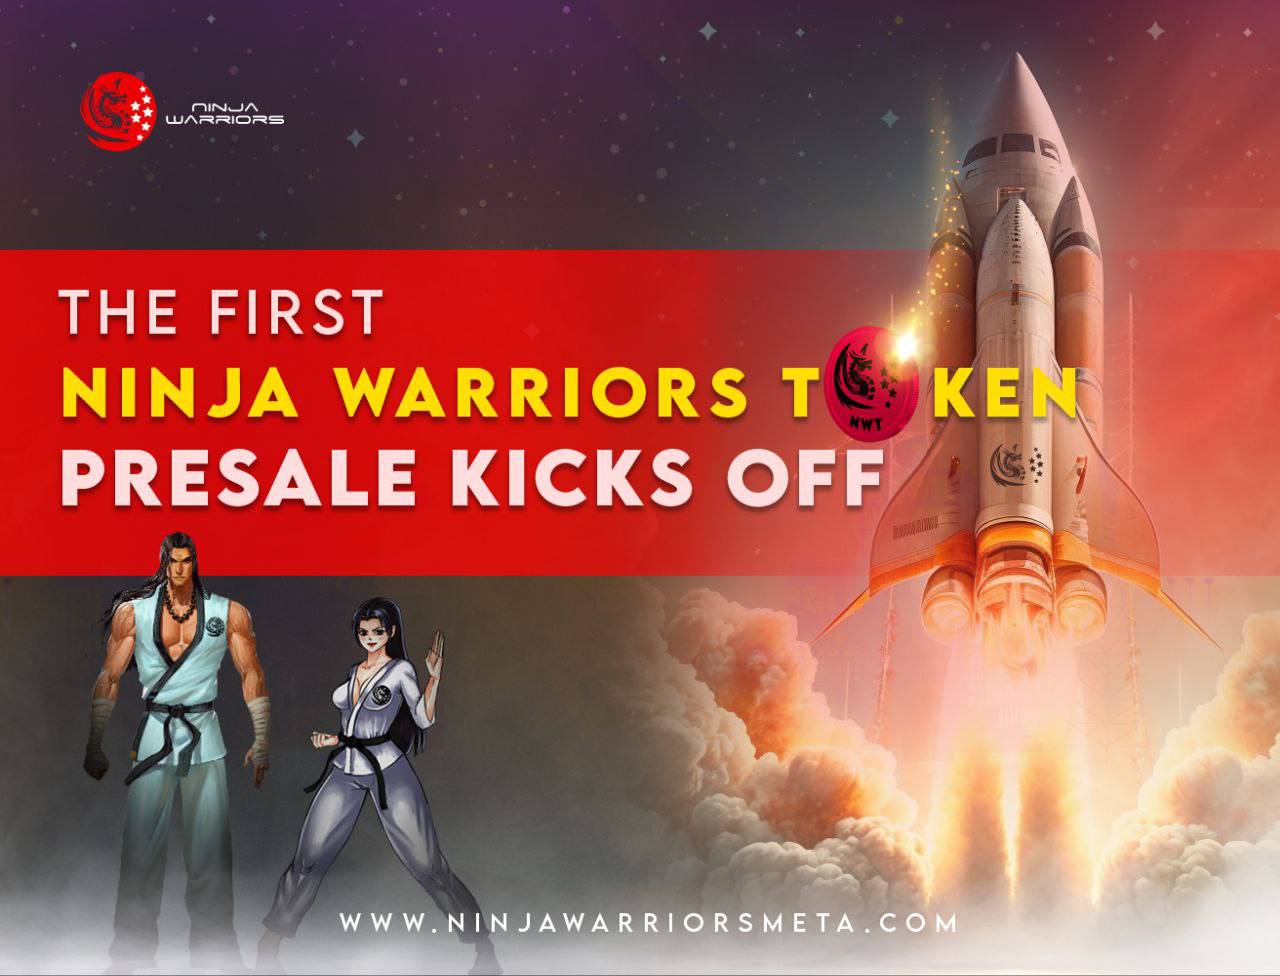 Ninja Warriors Meta launches second presale ahead of Full Gameplay Release in Q4 2023